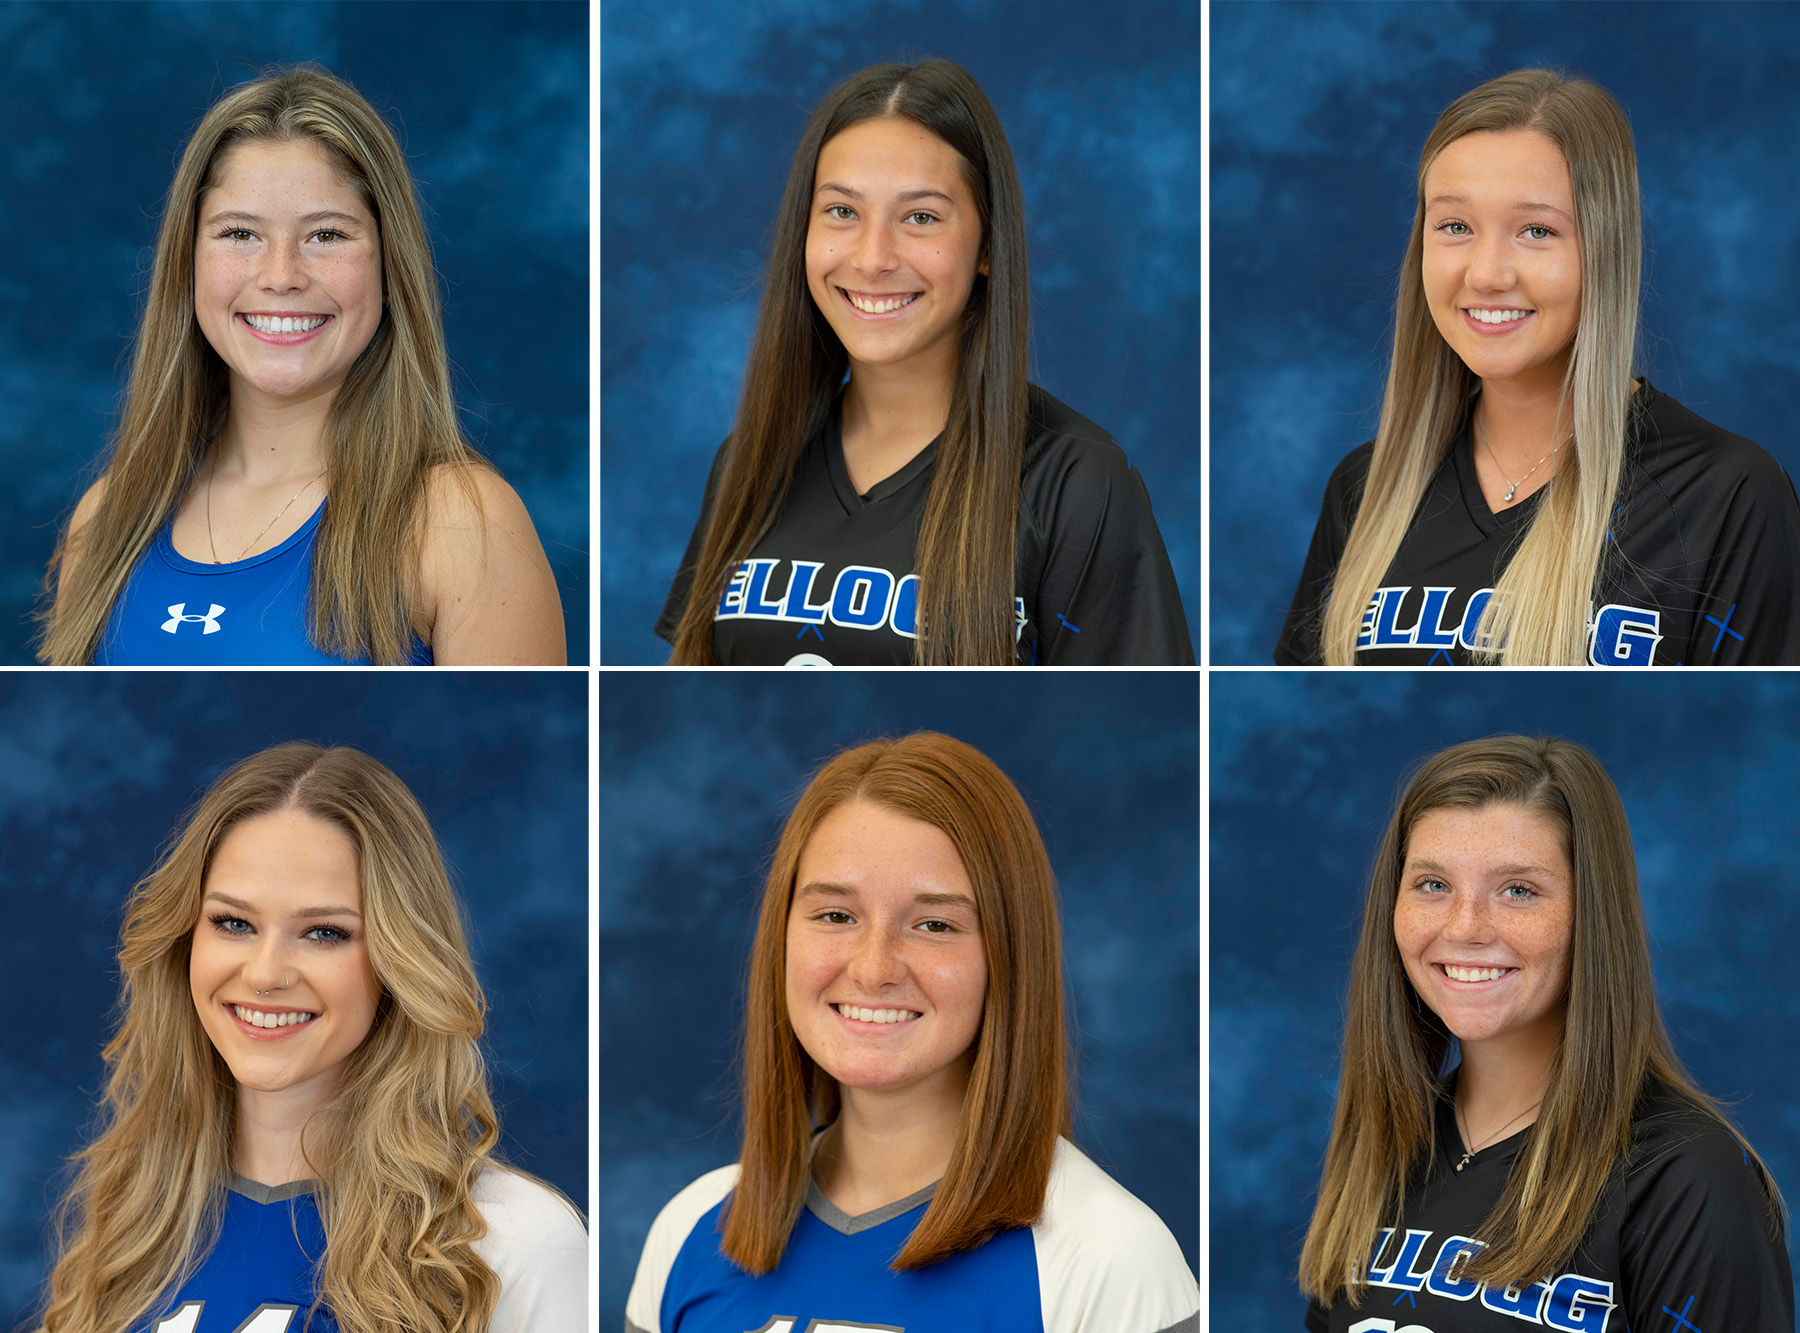 Portraits of KCC's six student athlete award winners for the Fall 2021 season.